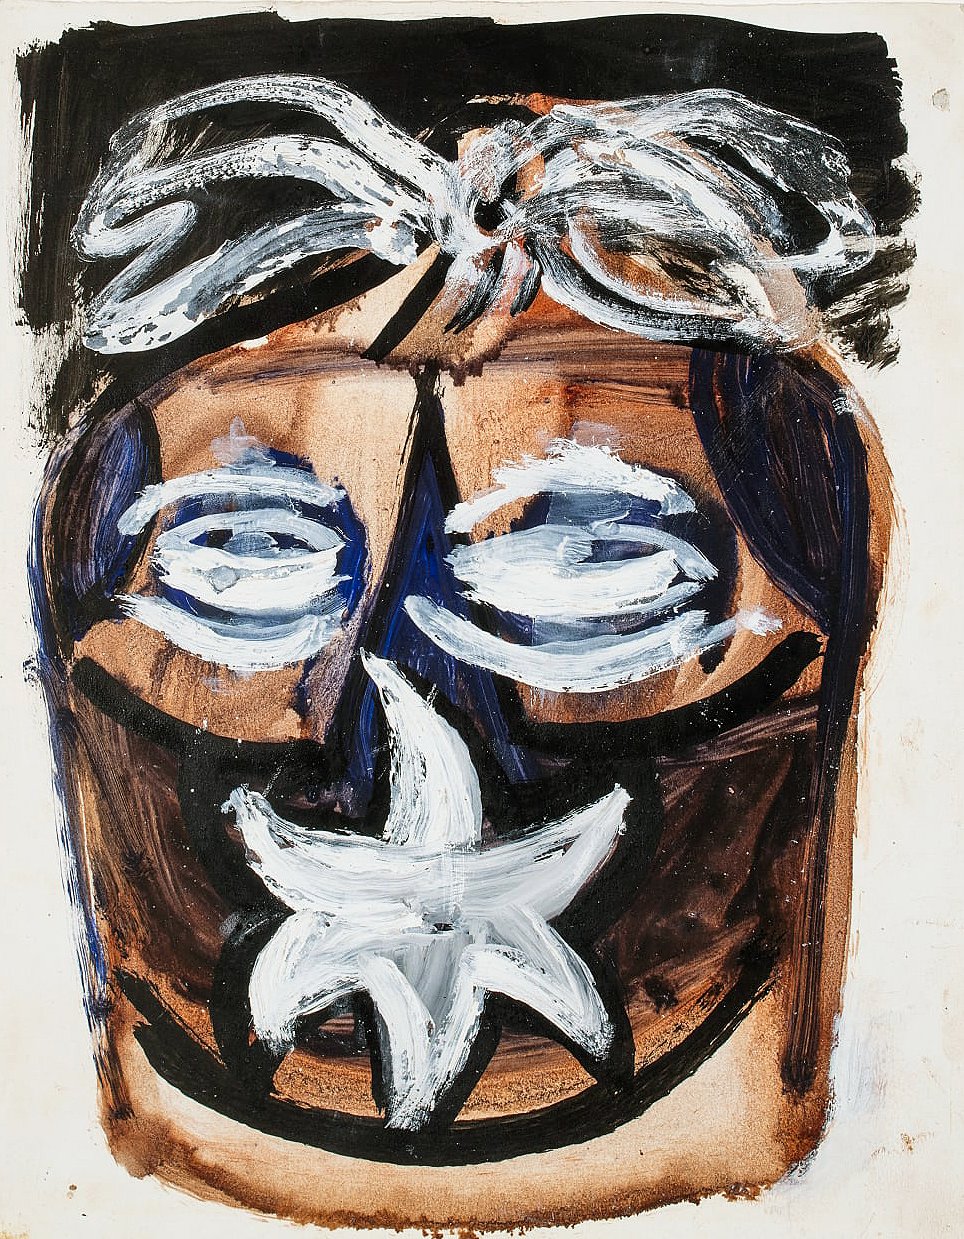 José Clemente Orozco, Lyrical Face, 1947